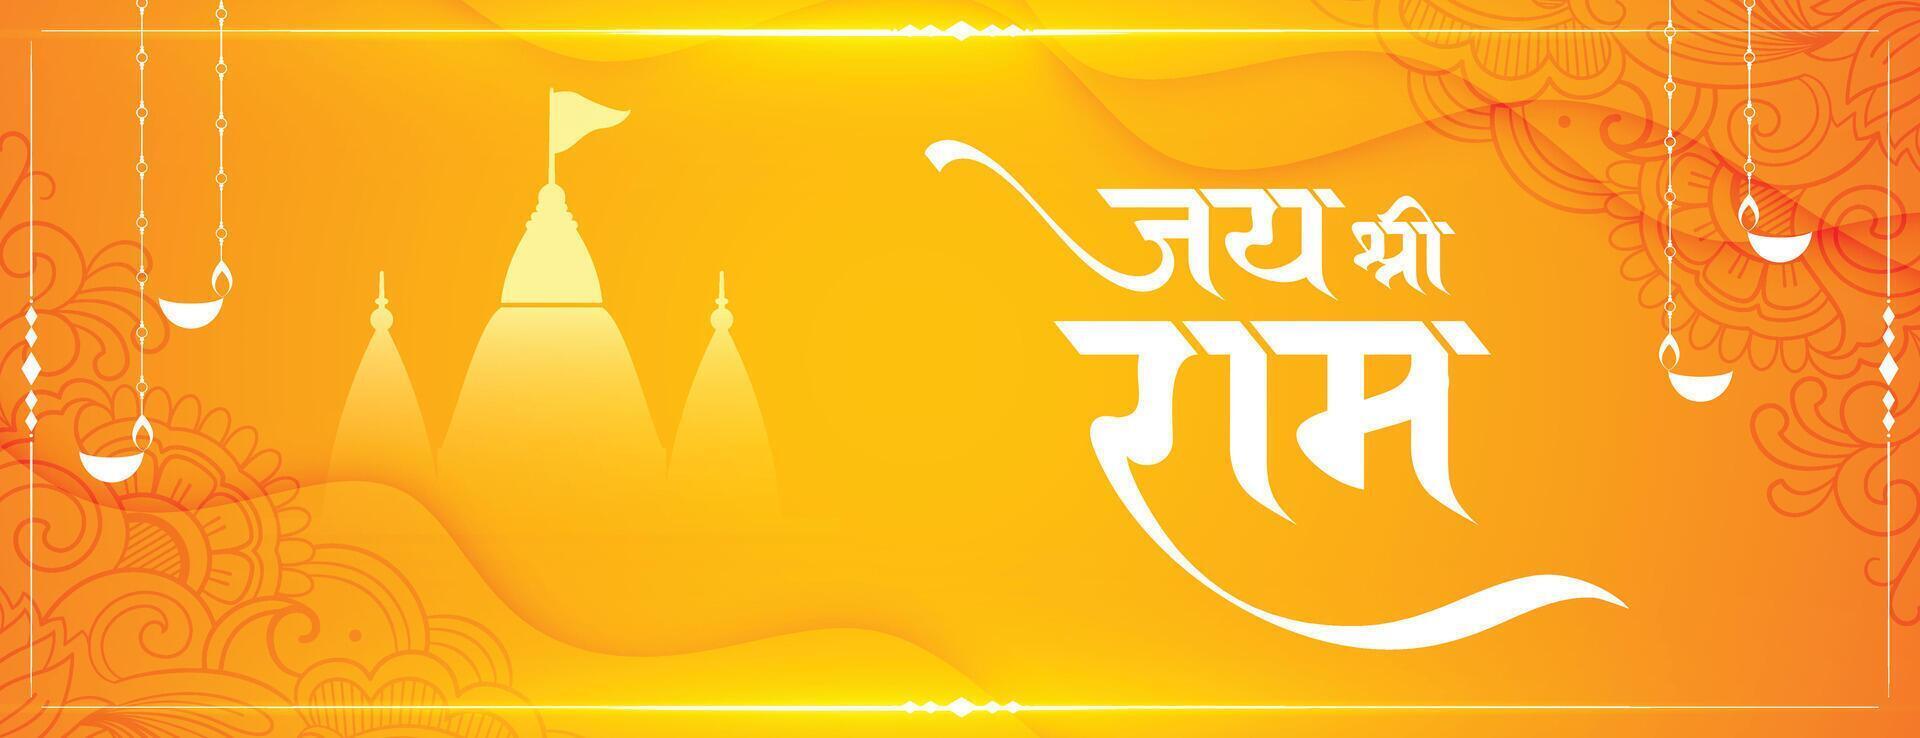 elegant Shri RAM Navami diwas wünscht sich Banner mit Mandir Design vektor